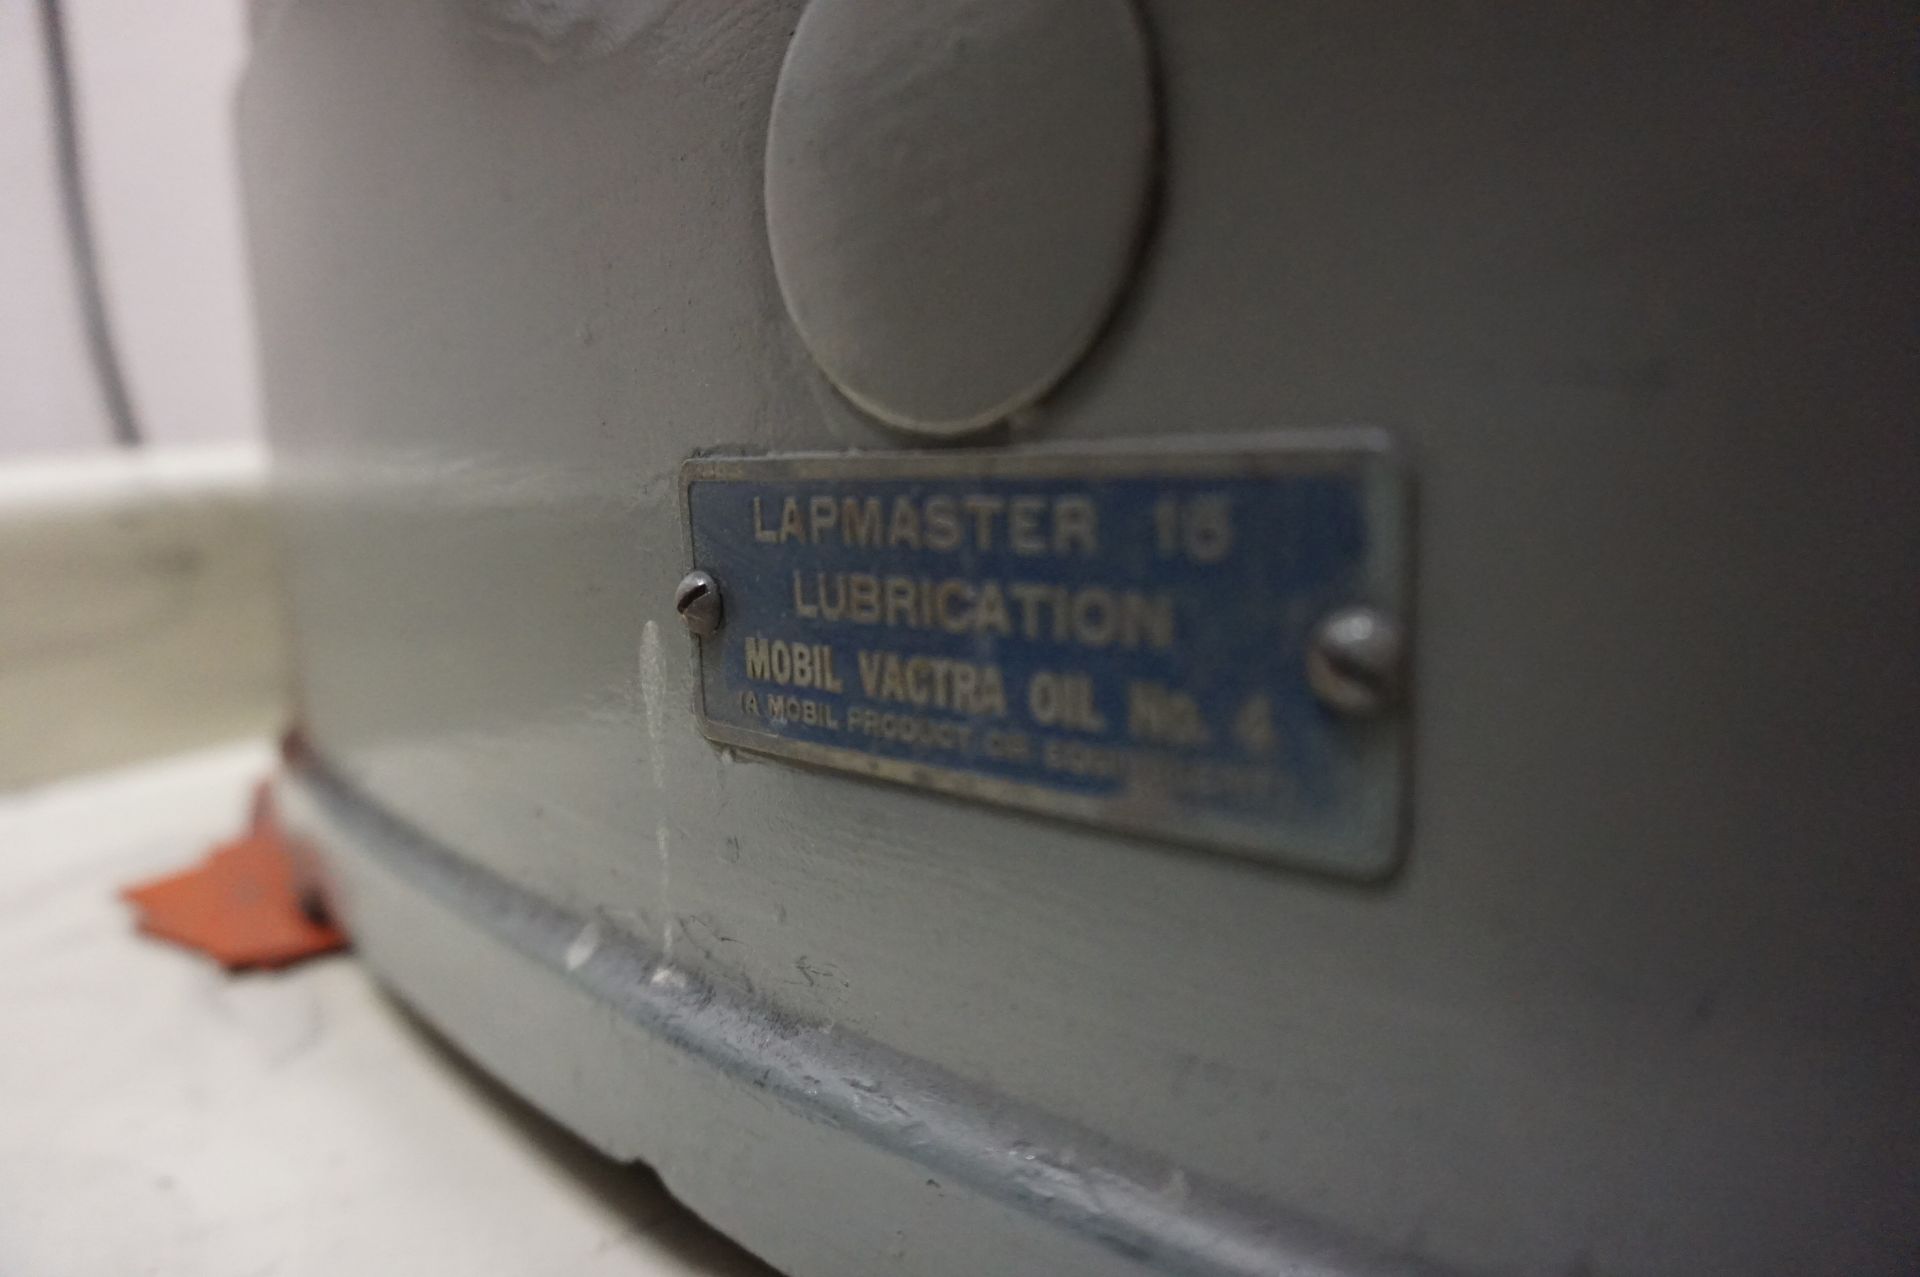 LAPMASTER 15 SINGLE SIDED LAPPING MACHINE, S/N C18707 - Image 4 of 9